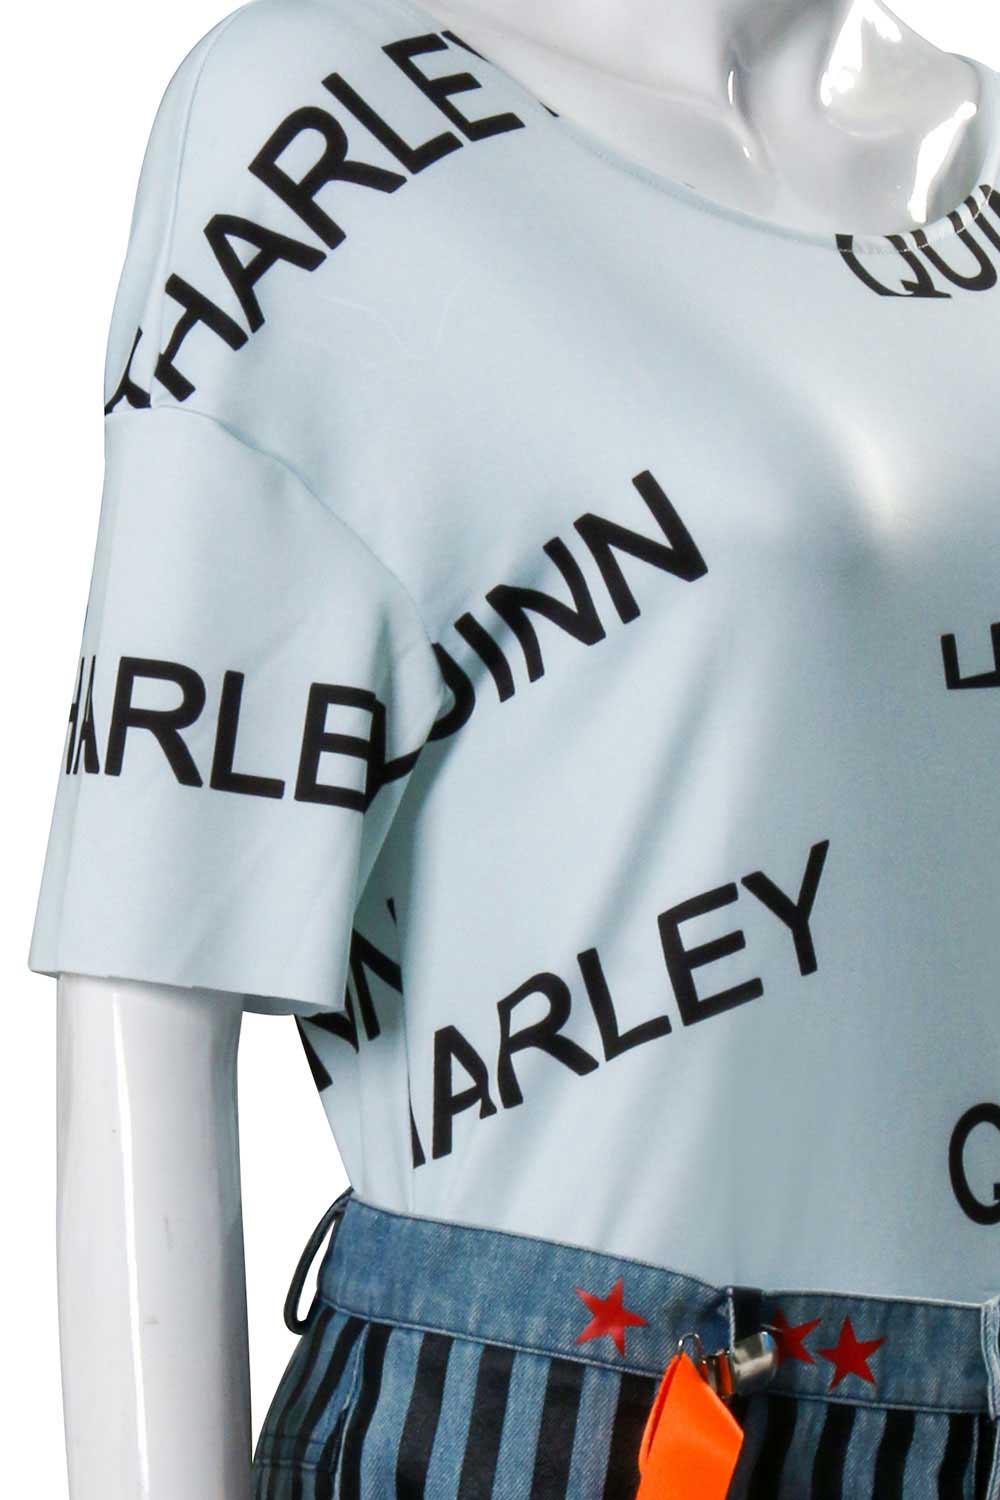 Birds of Prey Harley Quinn Cosplay Costumes T-shirt Short Brace